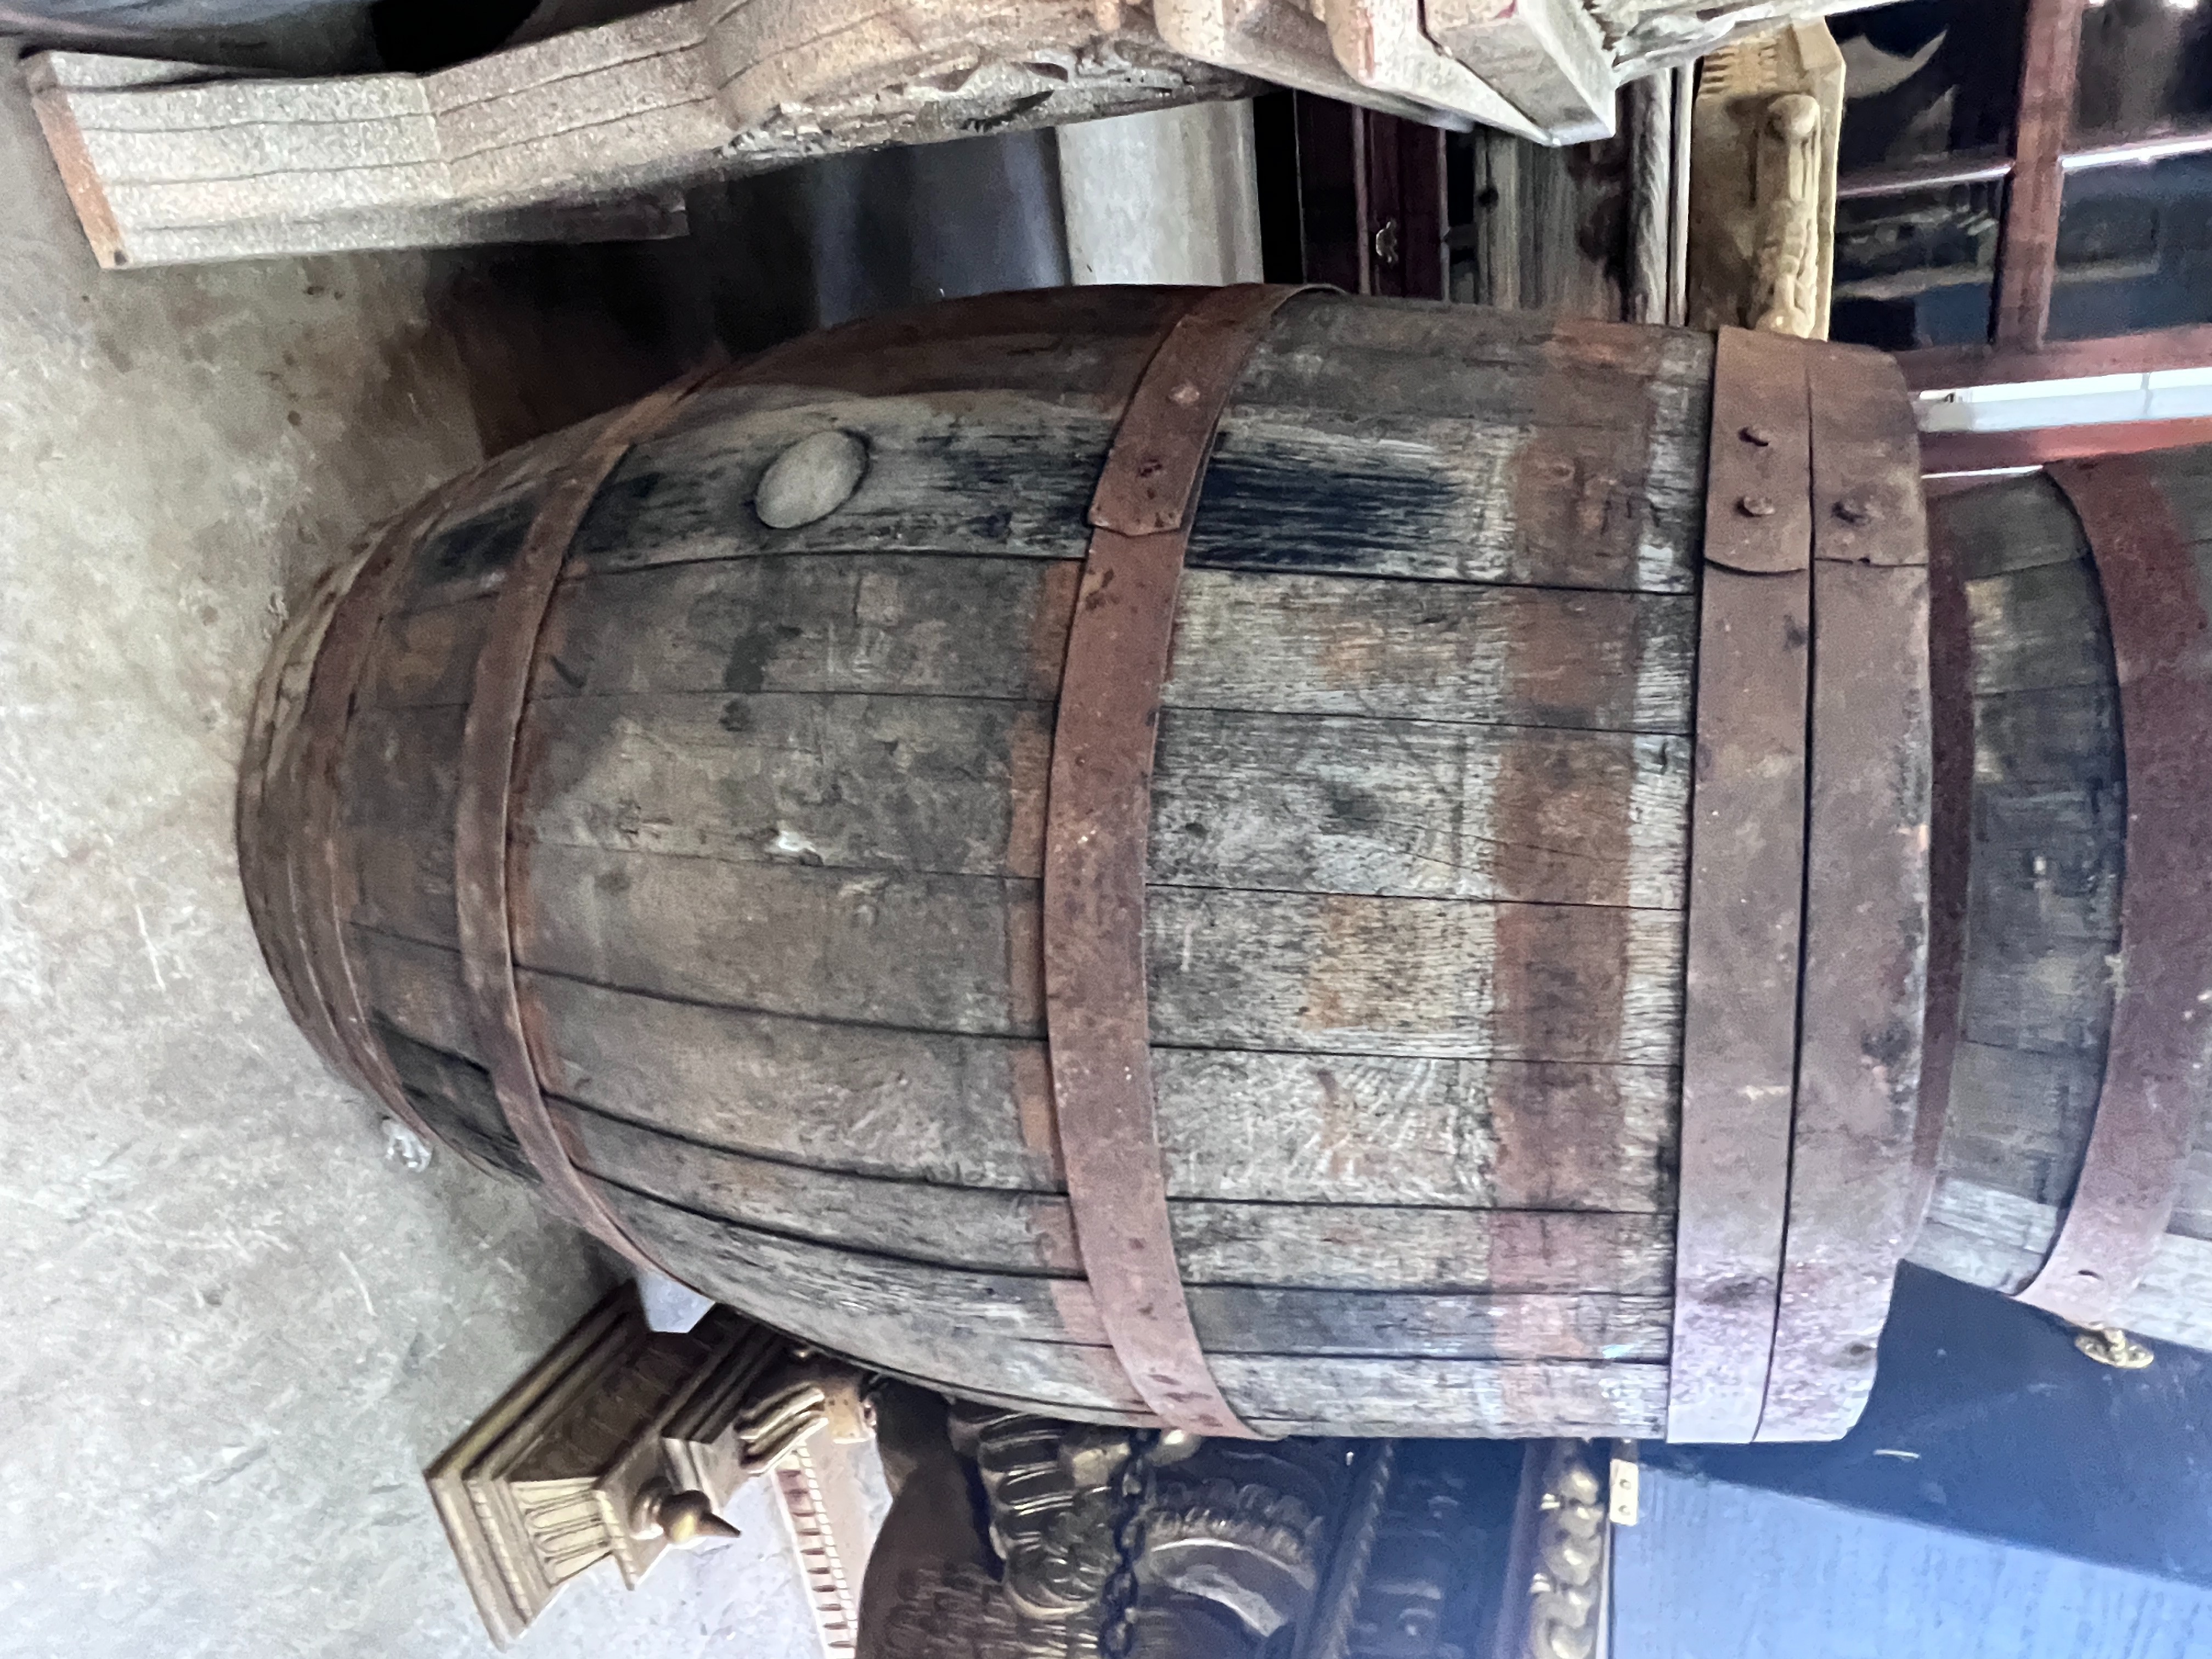 Three iron bound staved wood barrels, largest height 98cm